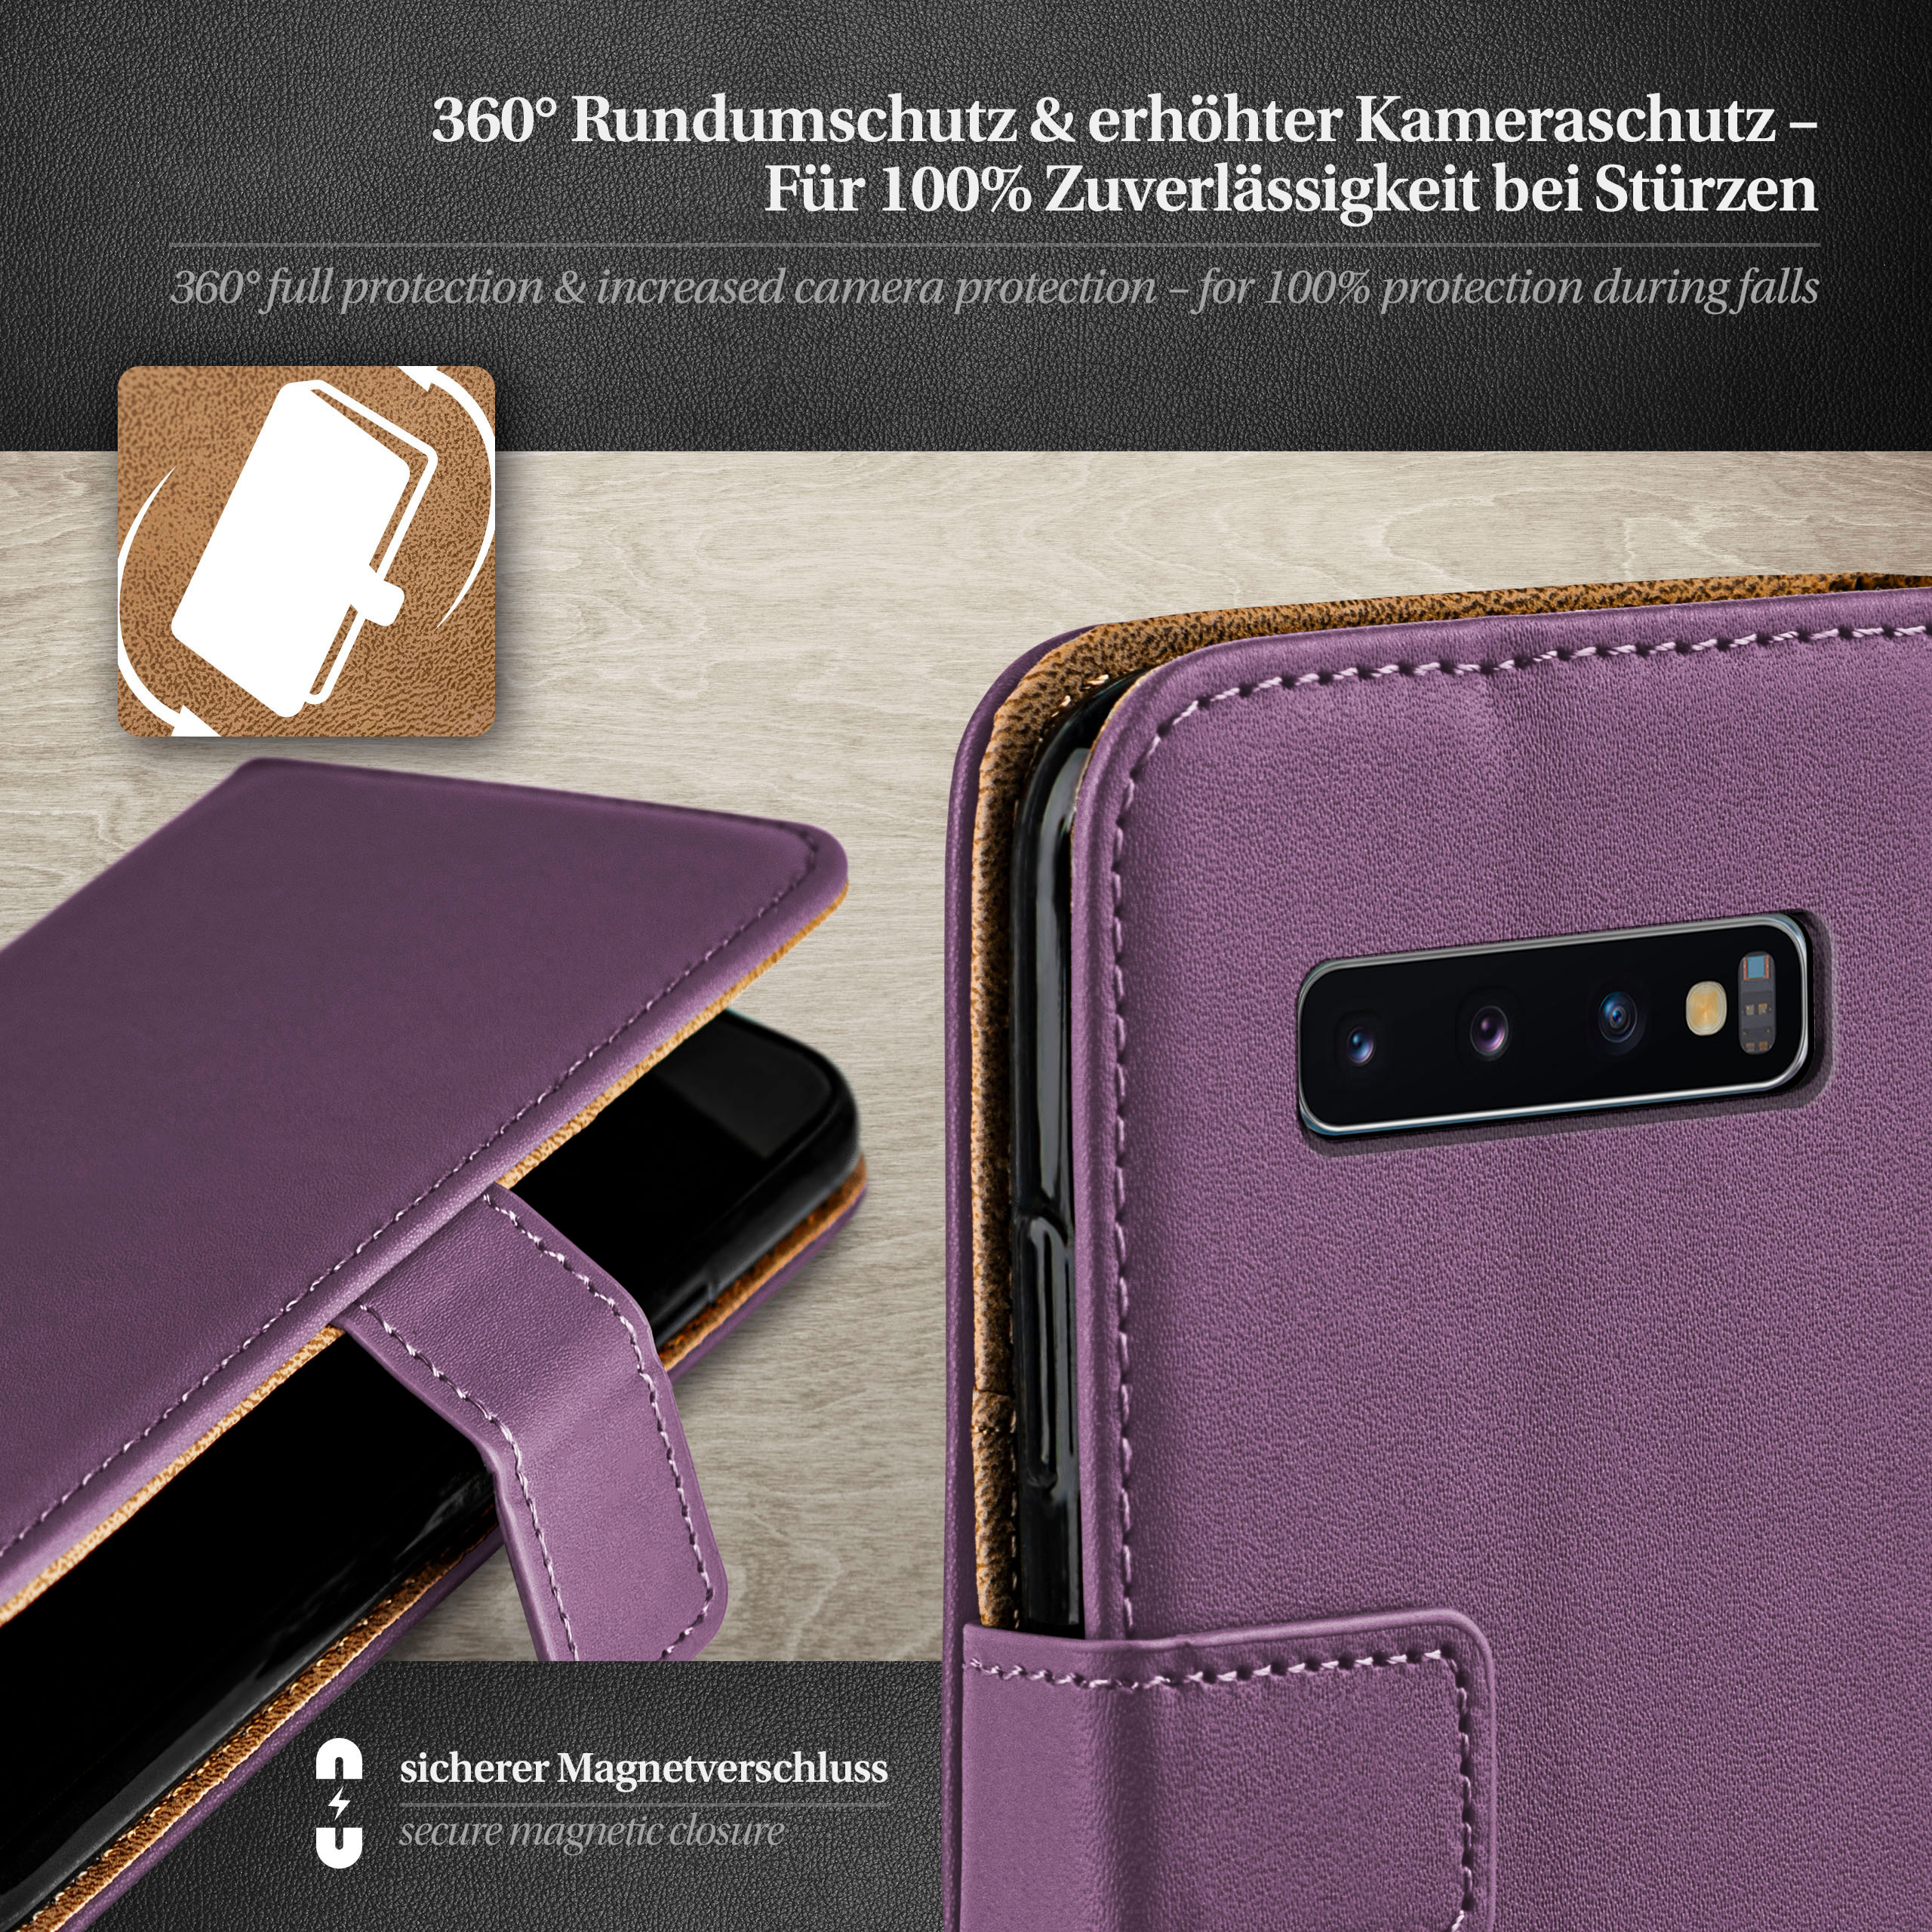 MOEX Book Plus, Samsung, Indigo-Violet Bookcover, Case, Galaxy S10